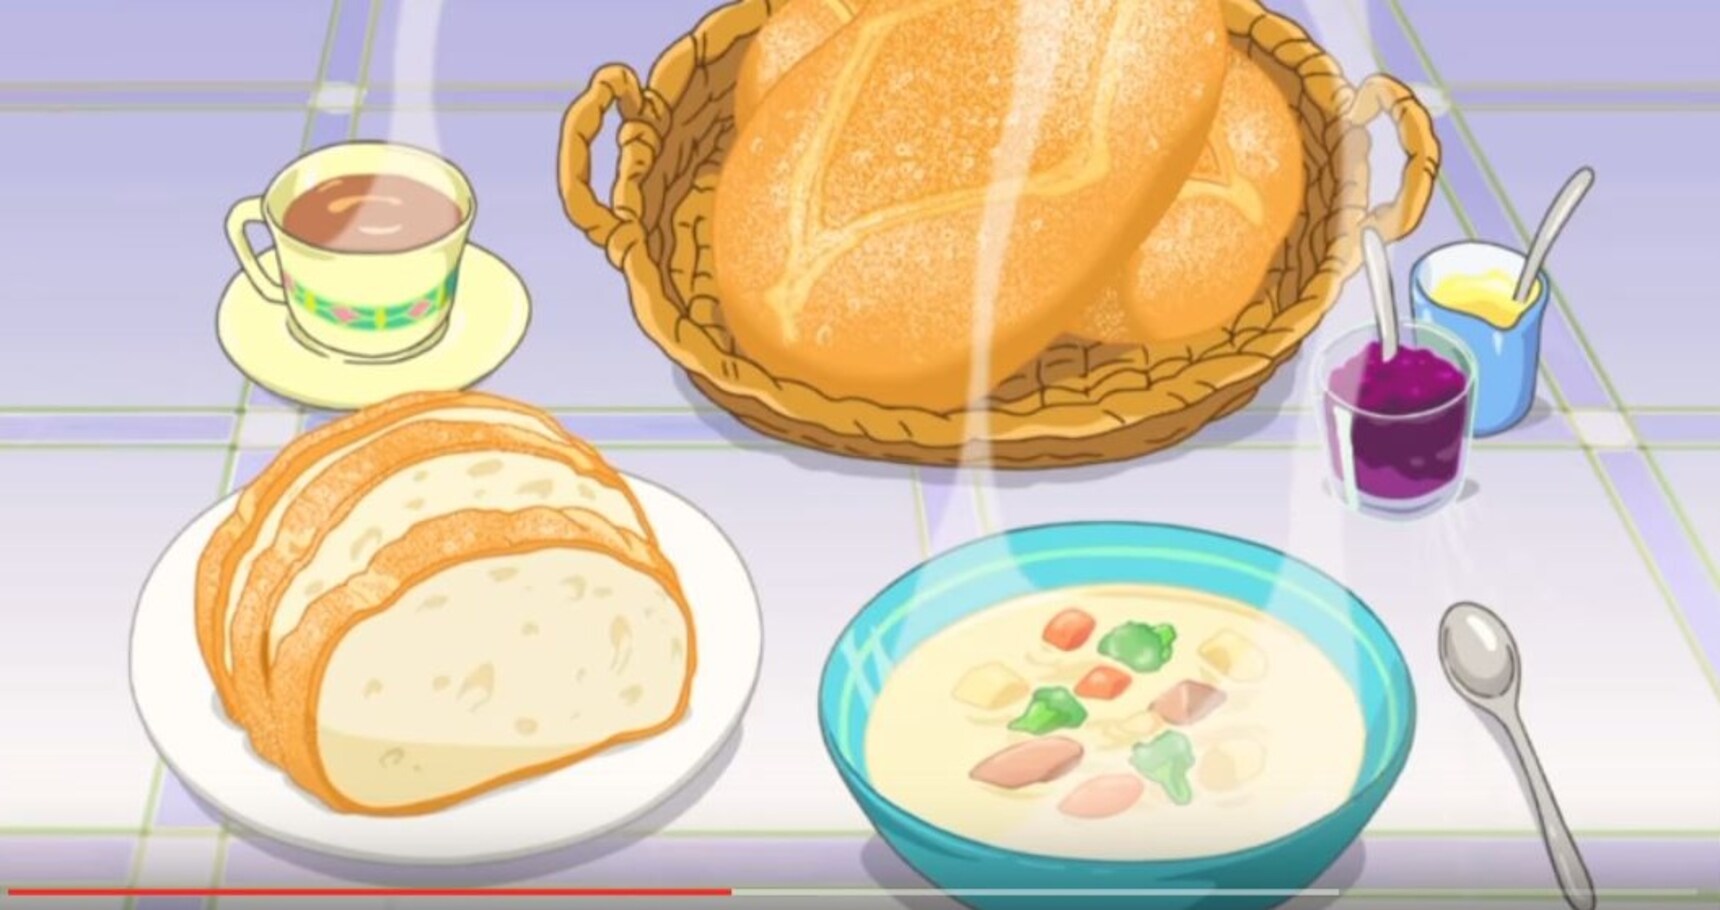 Ghibli Artist's Bread Ad Will Melt Your Heart